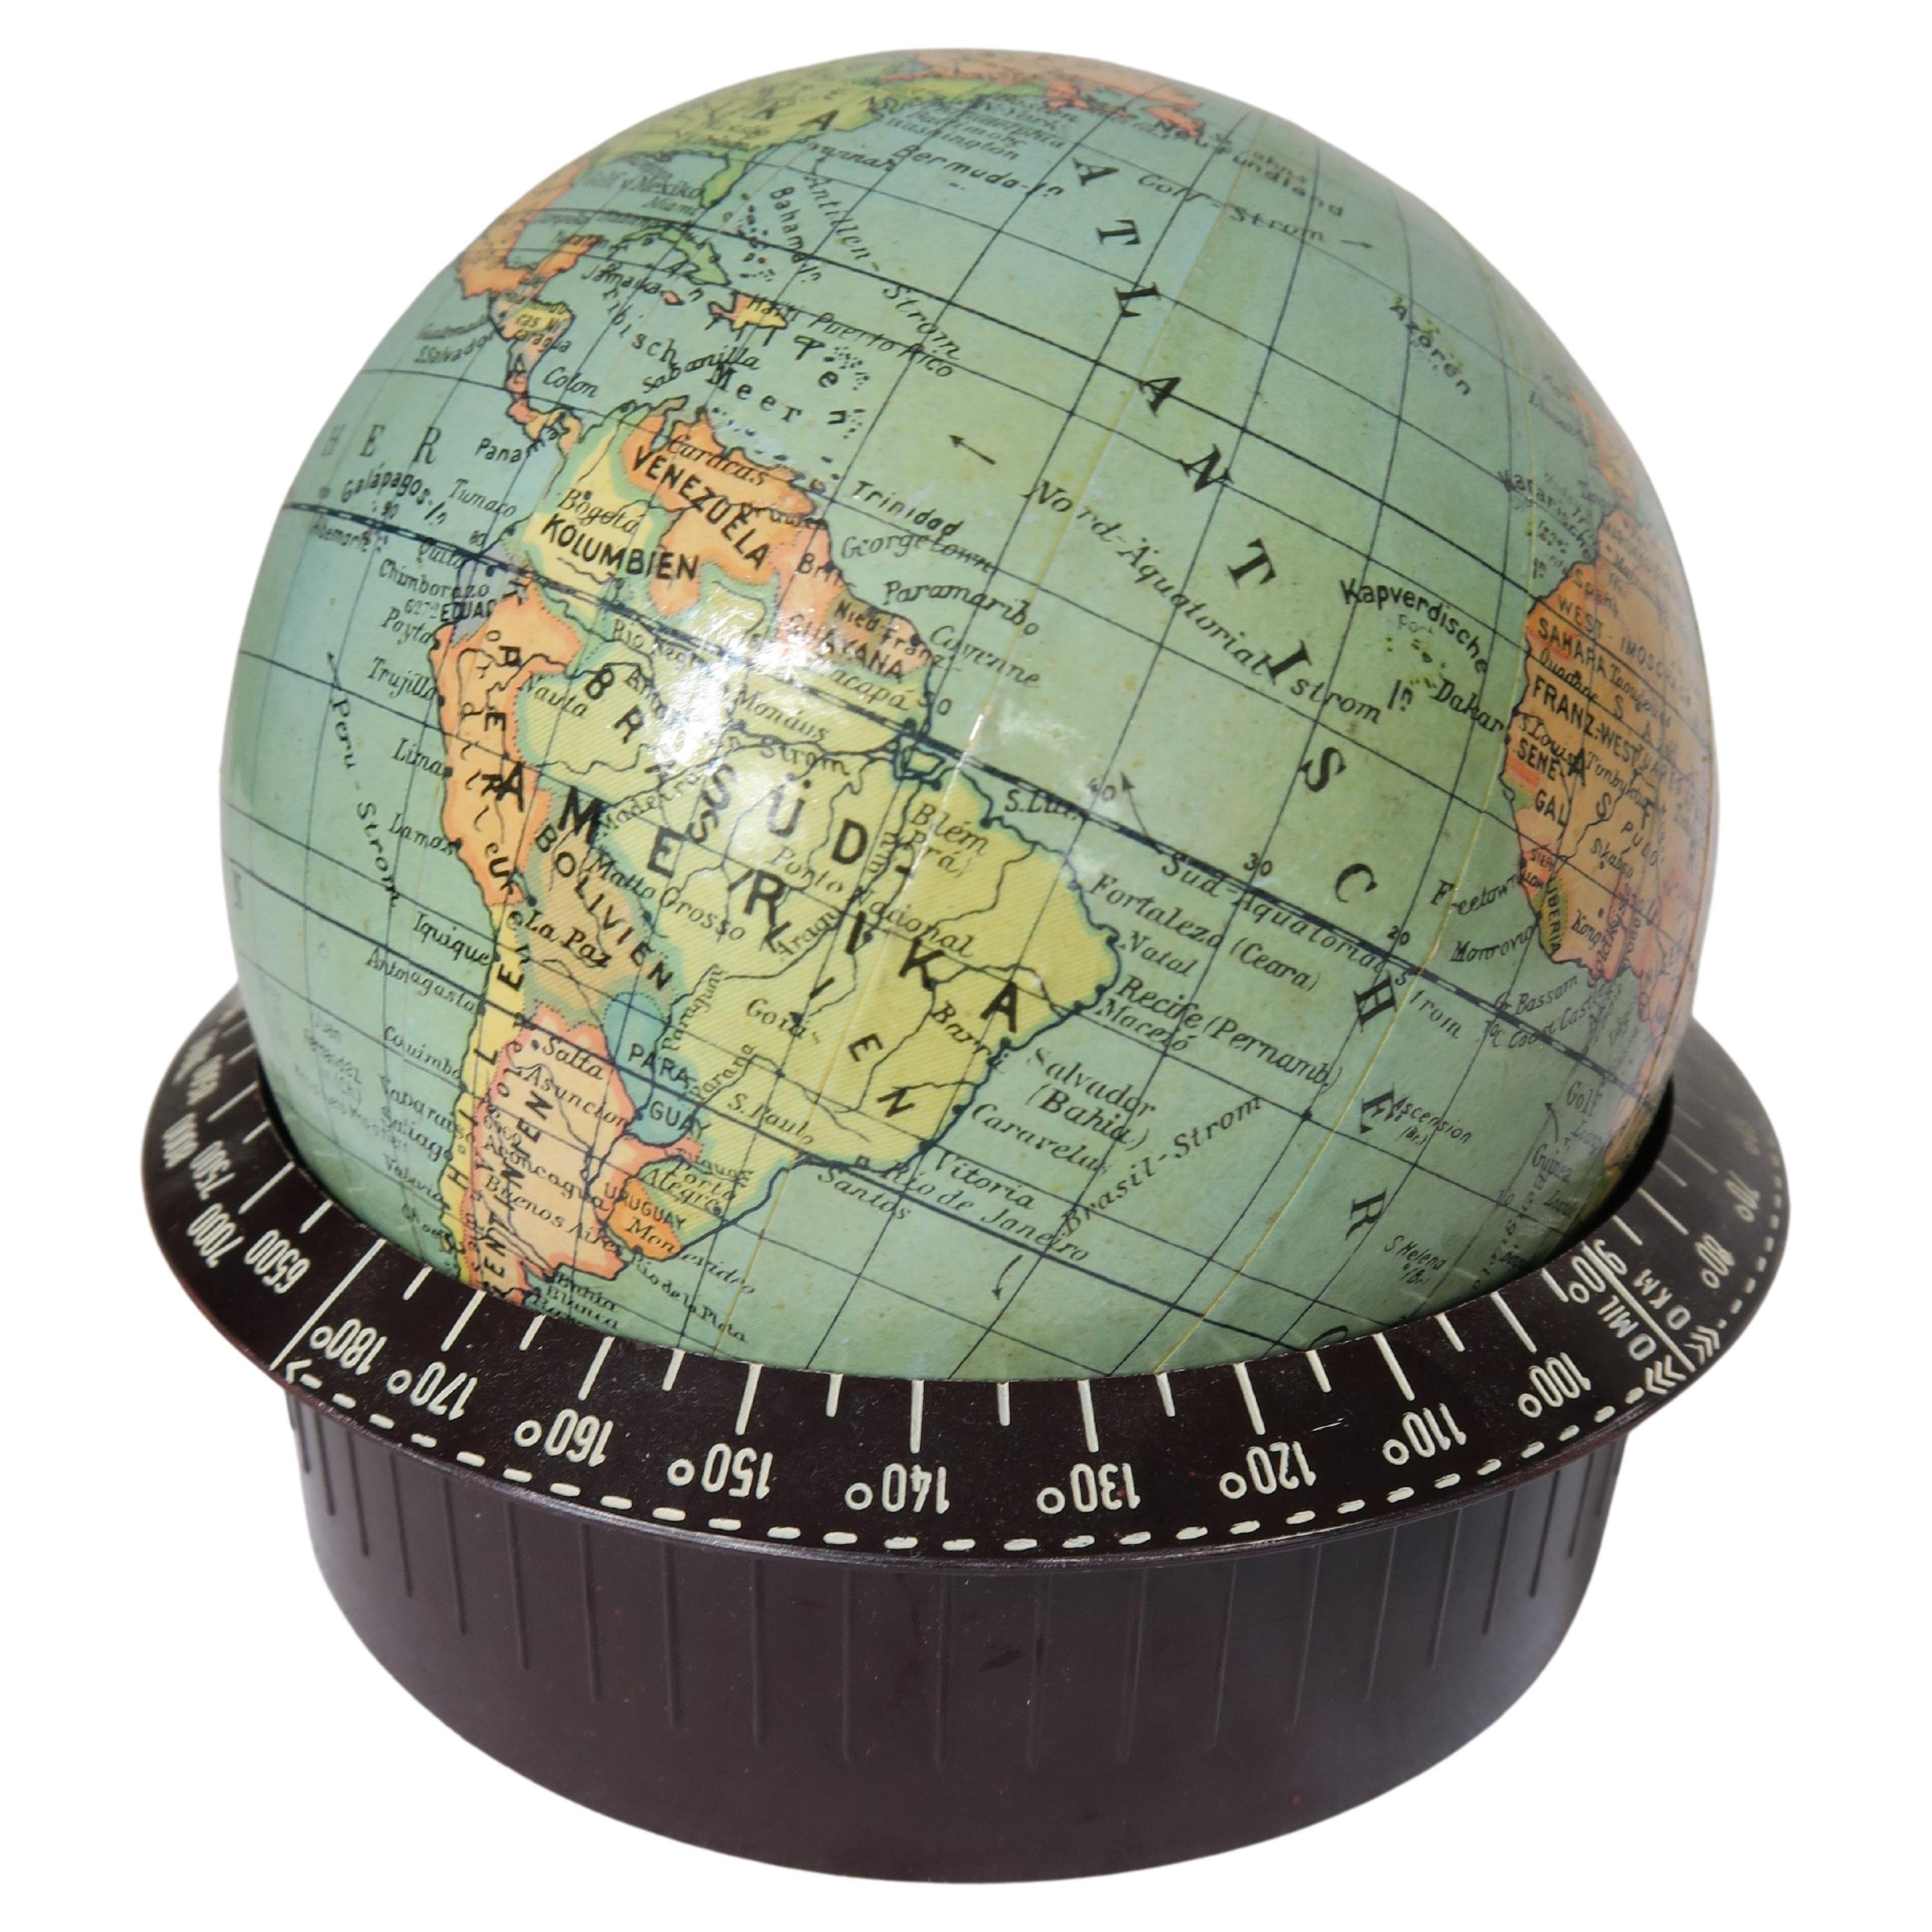 Rollglobus 'Rollable Globe' by Austrian Geographer Robert Haardt